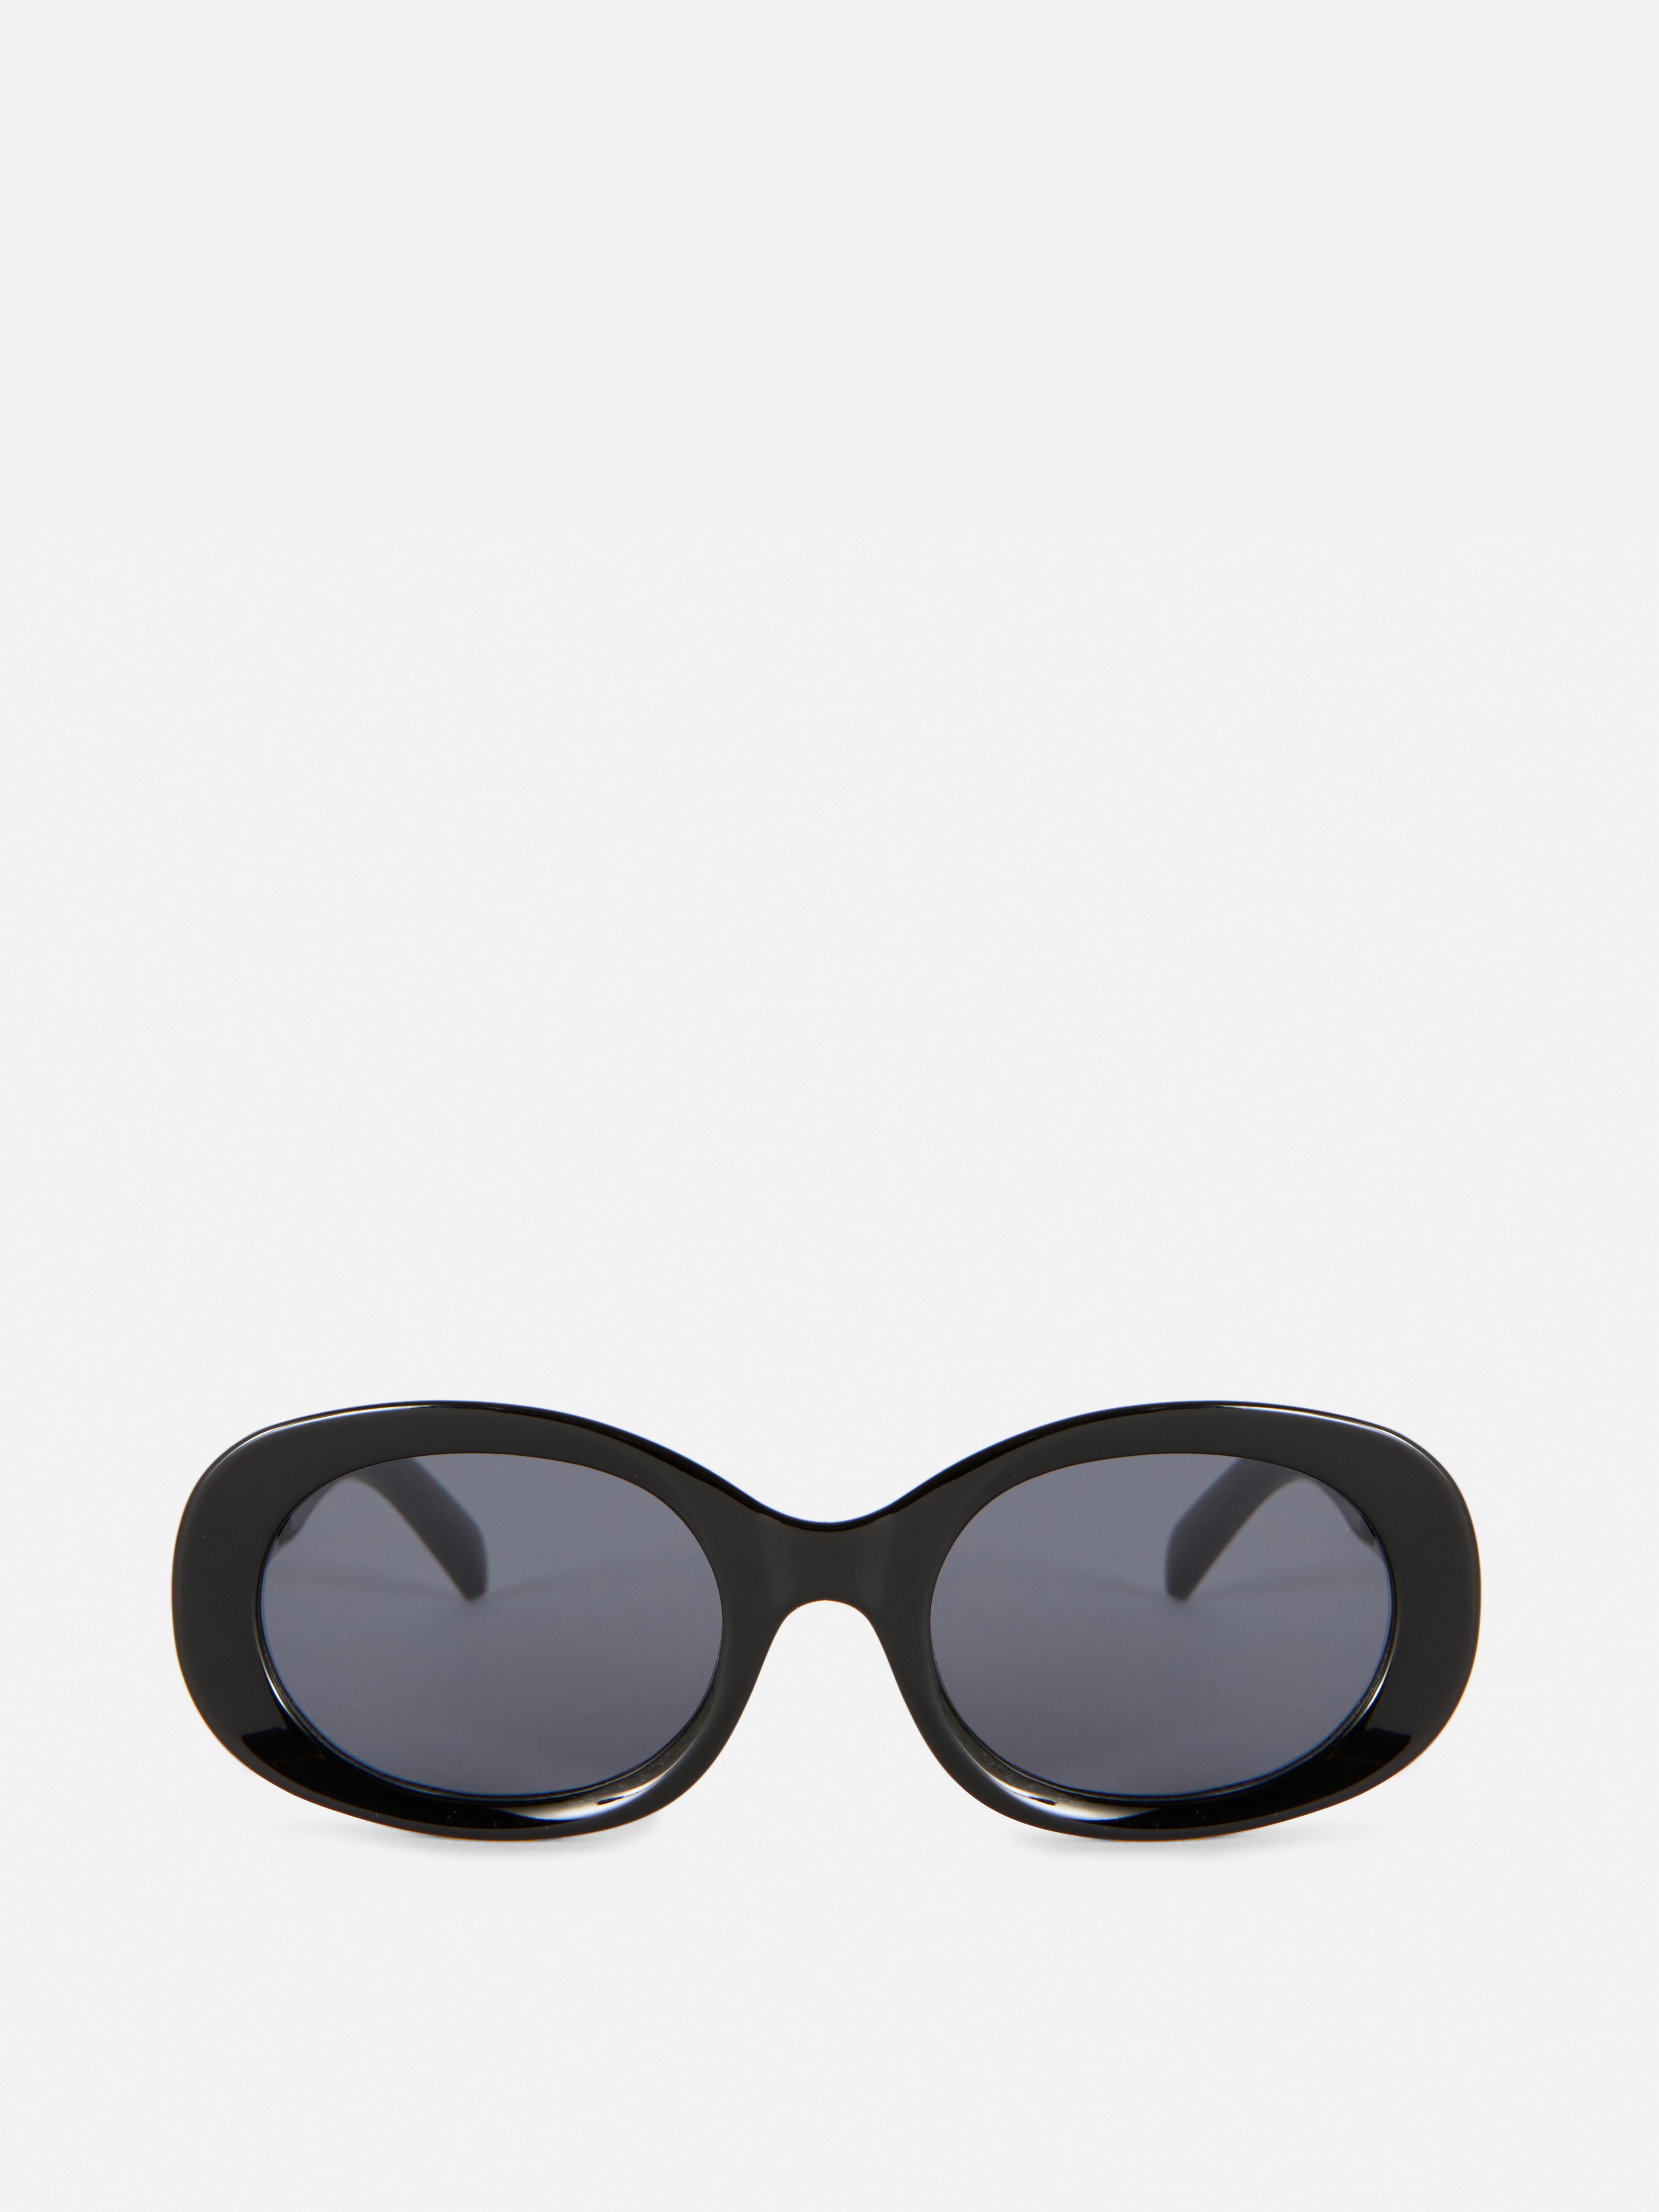 „Rita Ora“ große ovale Sonnenbrille